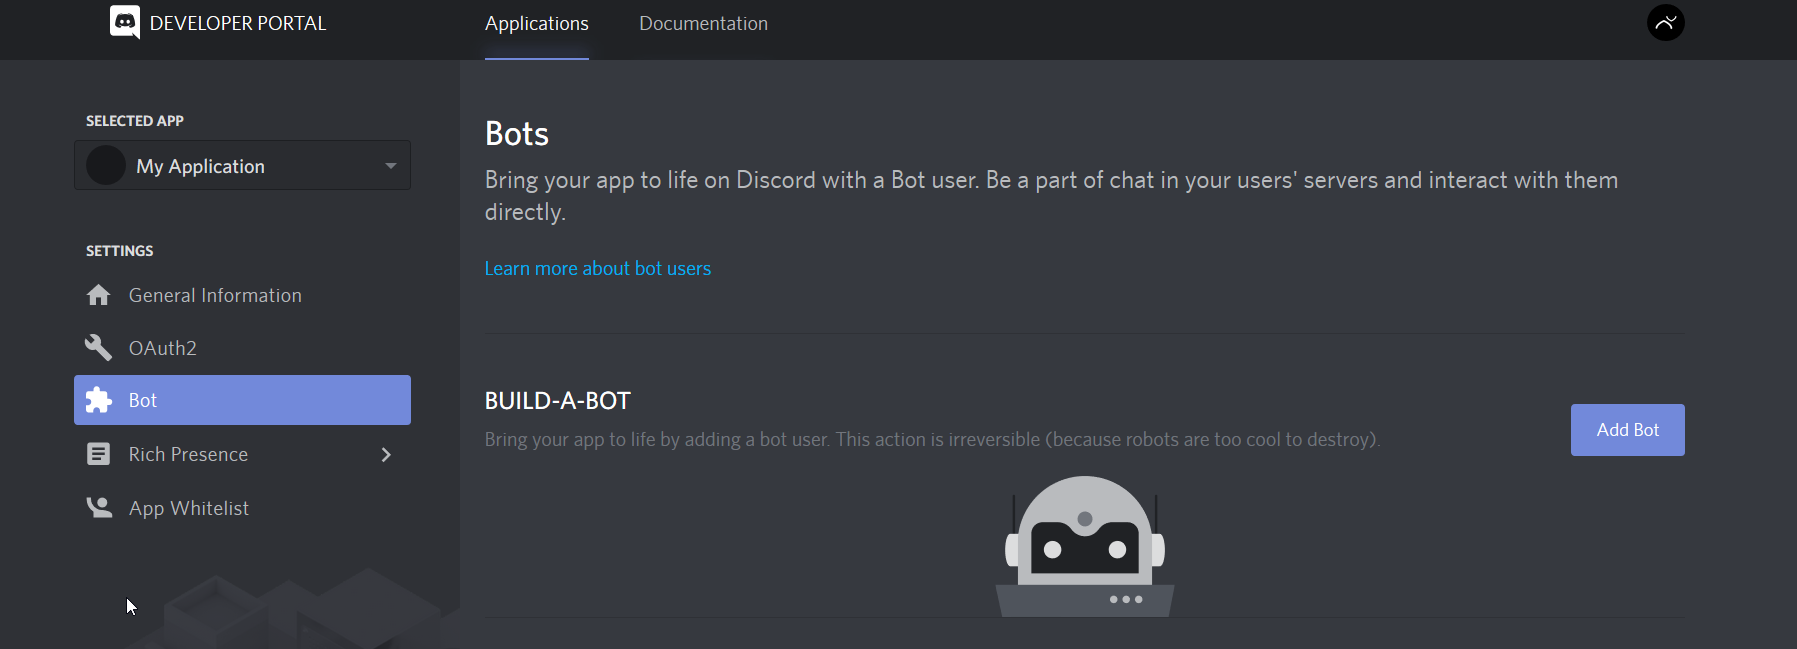 Discord Bot Builder Crack - roblox dump accounts 2019 discord